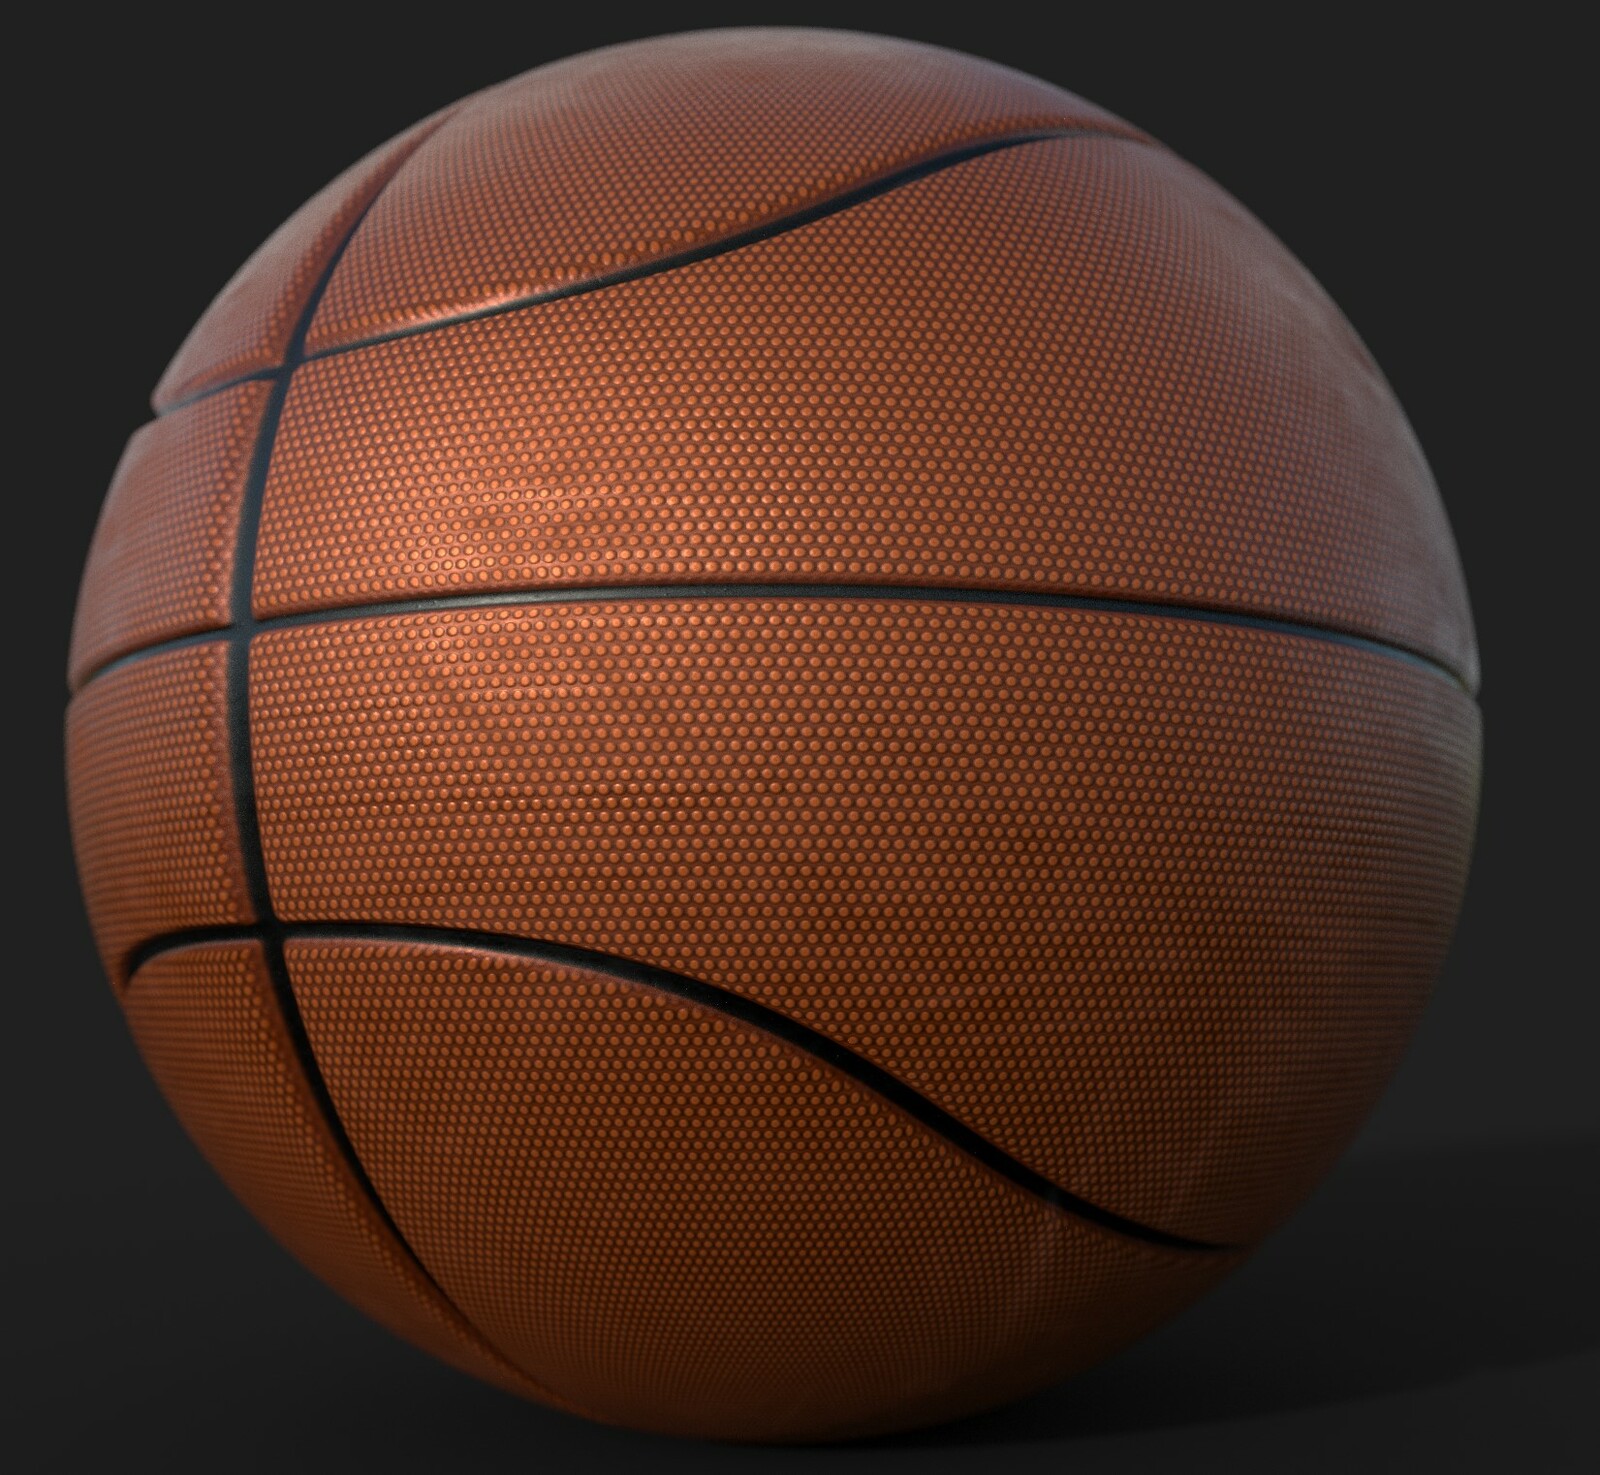 Procedural BasketBall  (And Tennis Ball) - Substance Designer